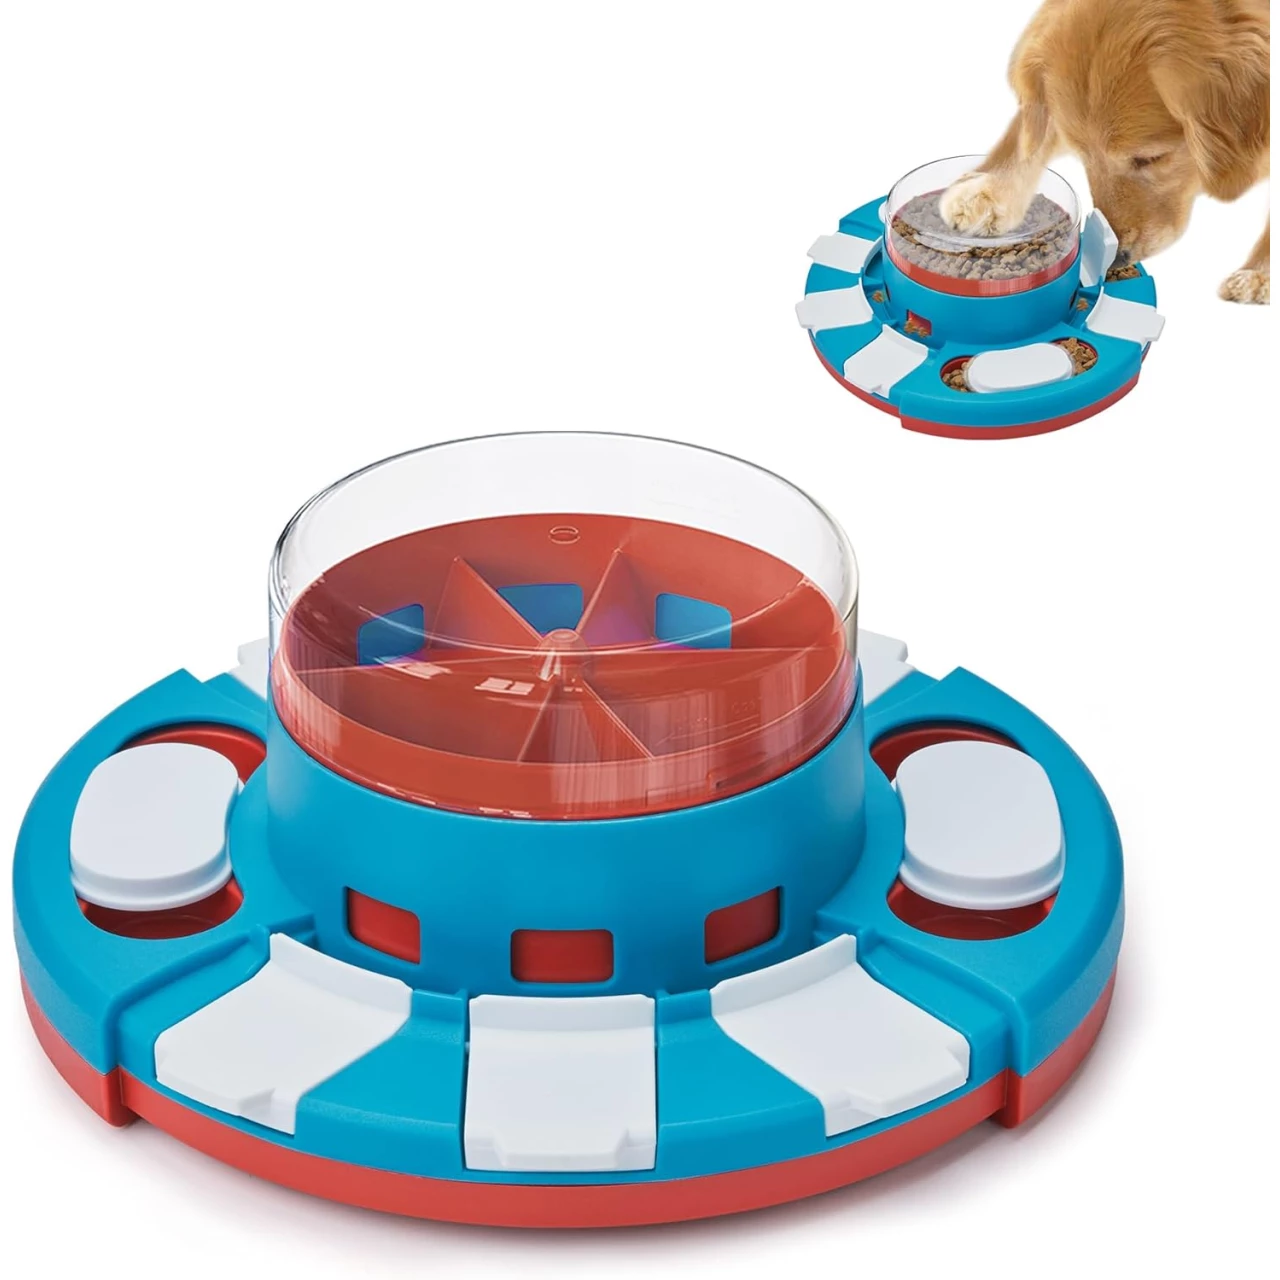 Potaroma Dog Puzzle Toy 2 Levels, Slow Feeder for Large Small Dogs, Dog Food Treat Feeding Toys for IQ Training